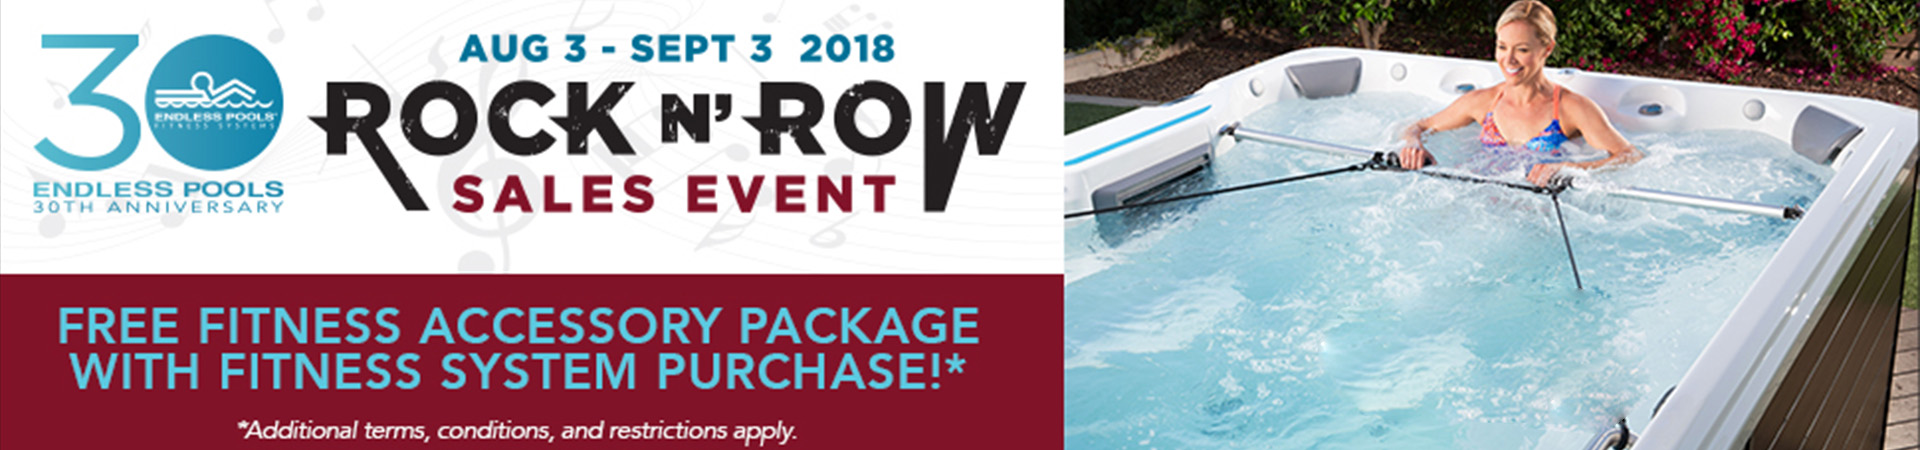 Rock N’ Row Endless Pools Sales Event